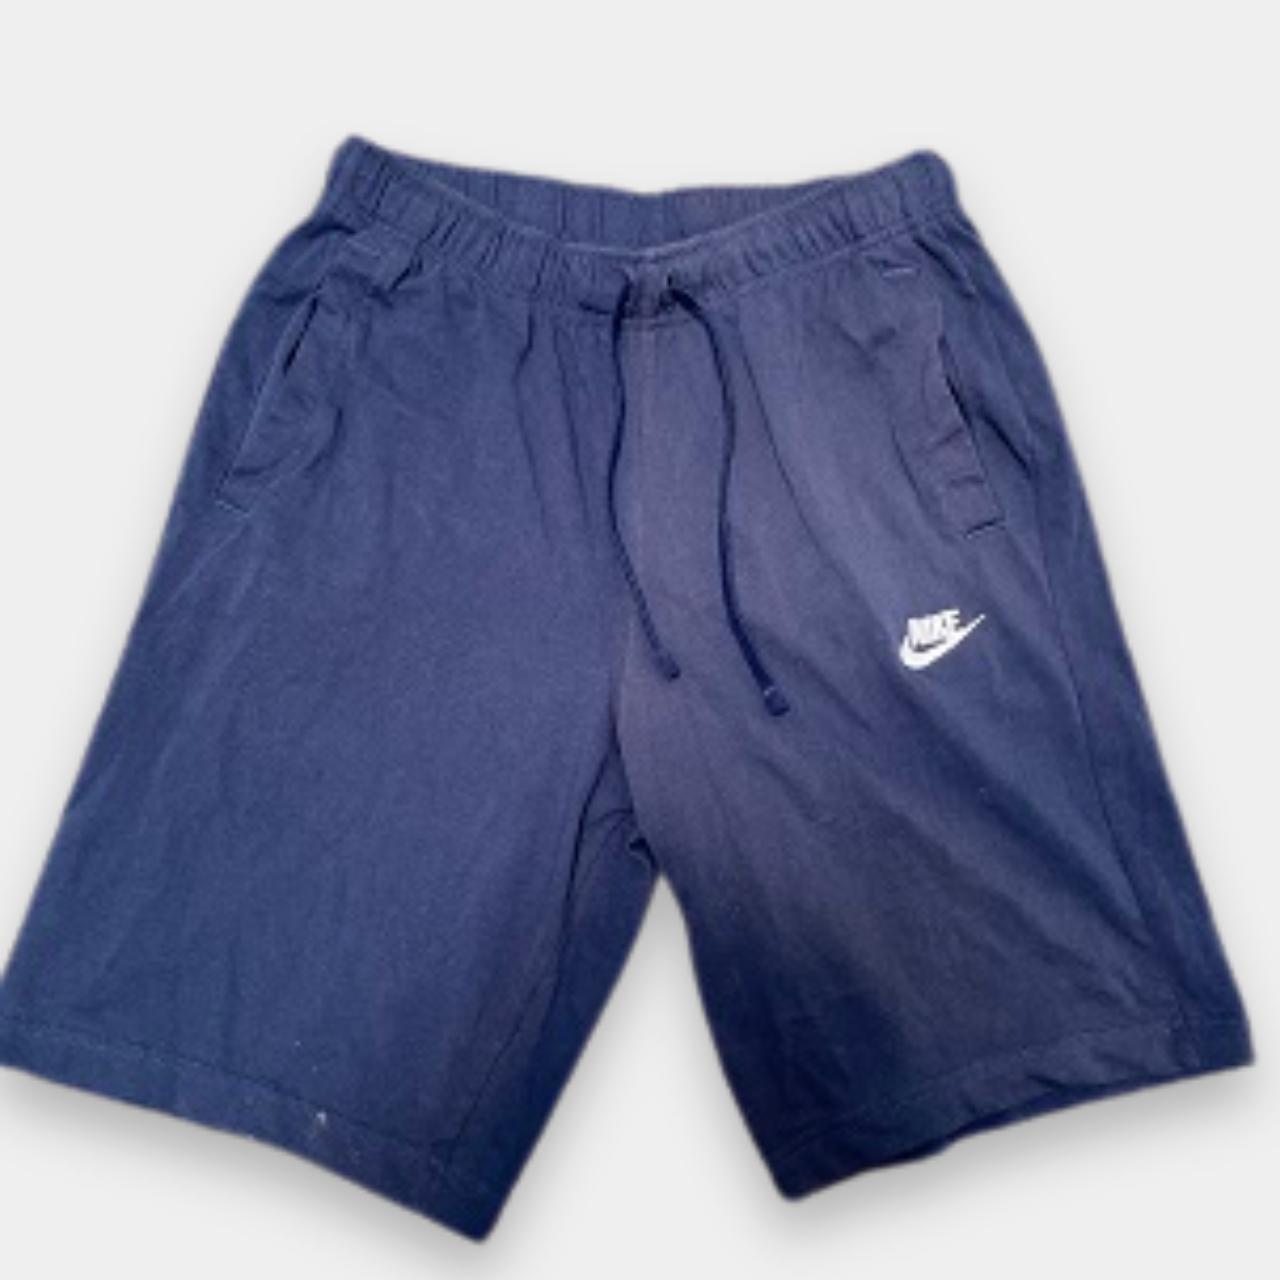 Vintage nike mens blue shorts size S